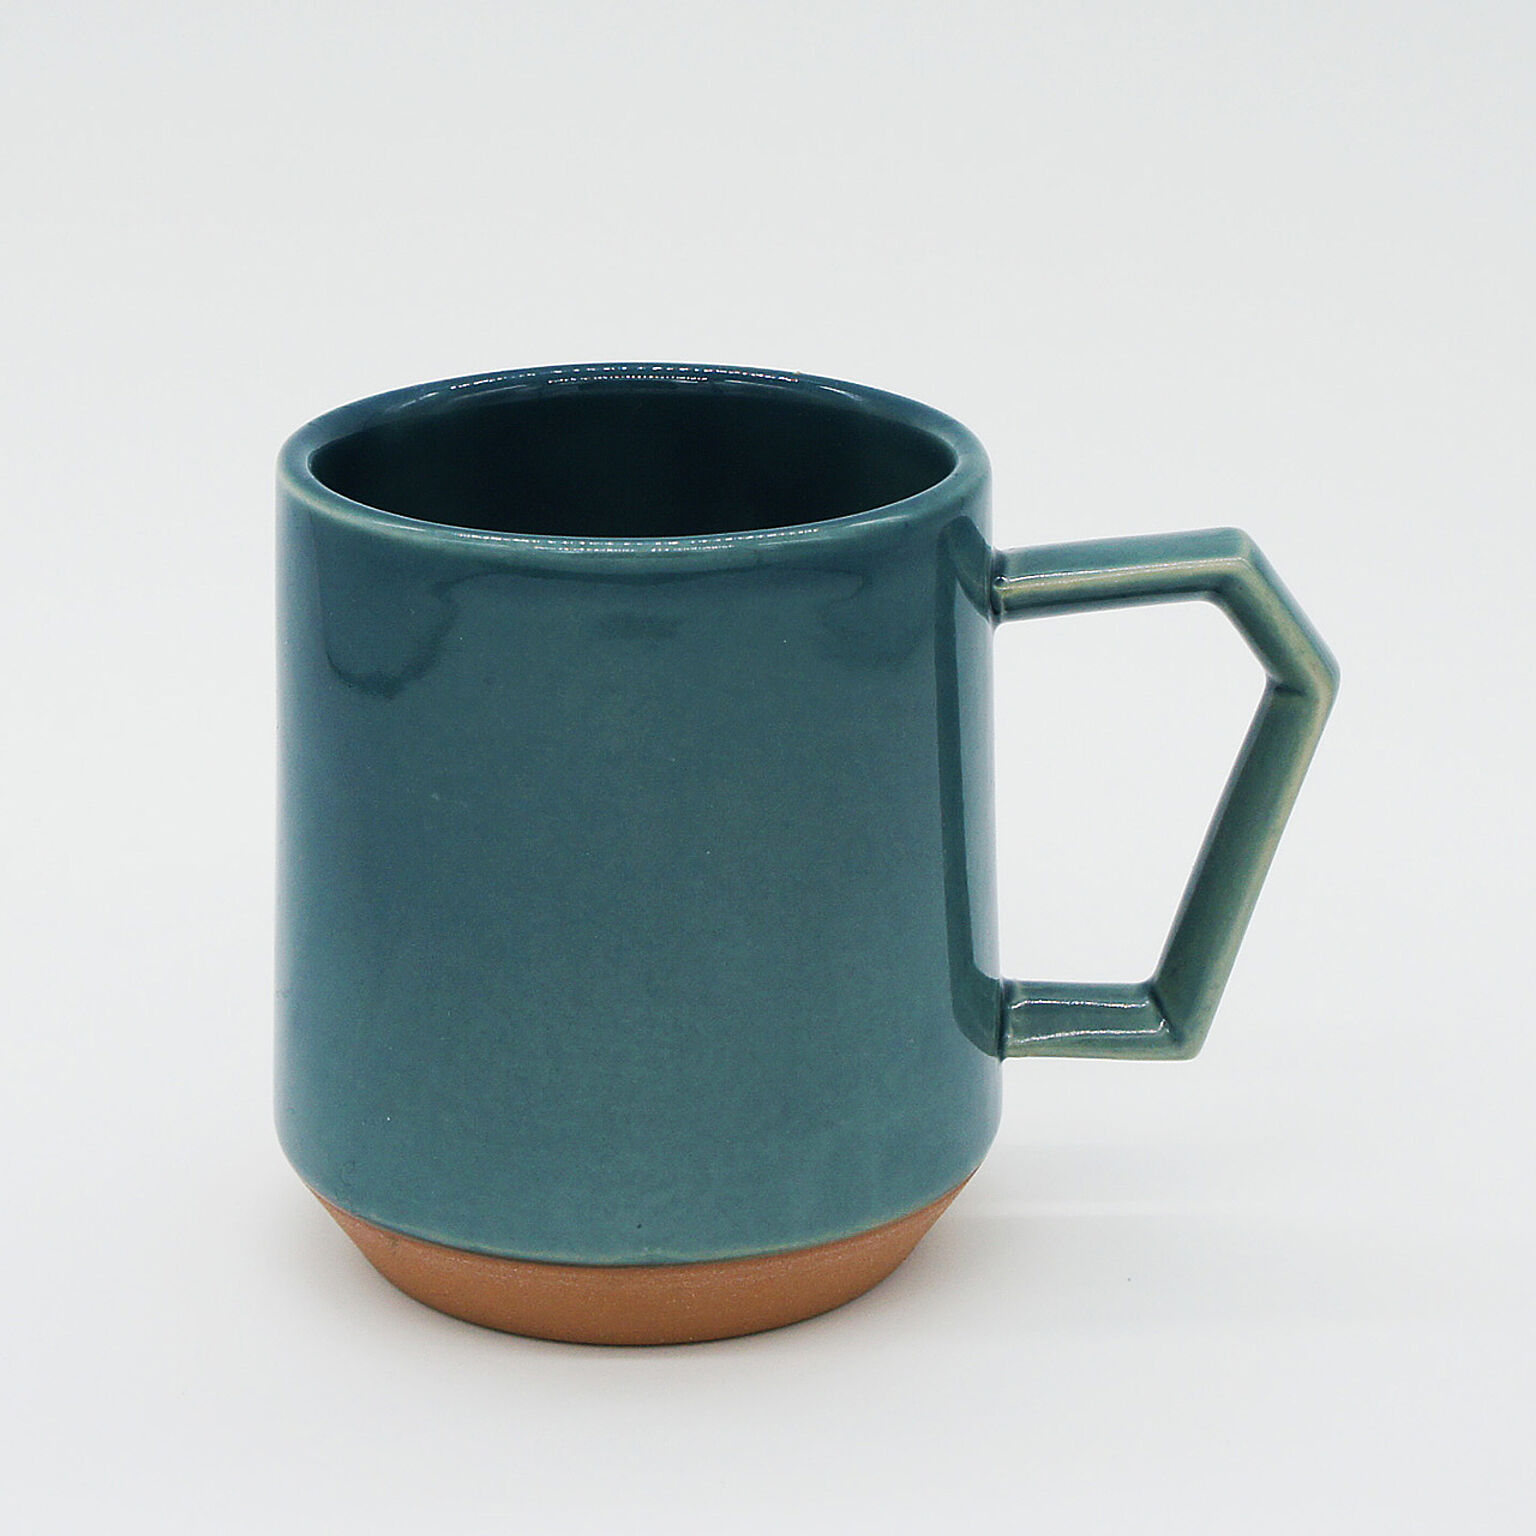 CHIPS mug. (380ml) - チップス マグ -